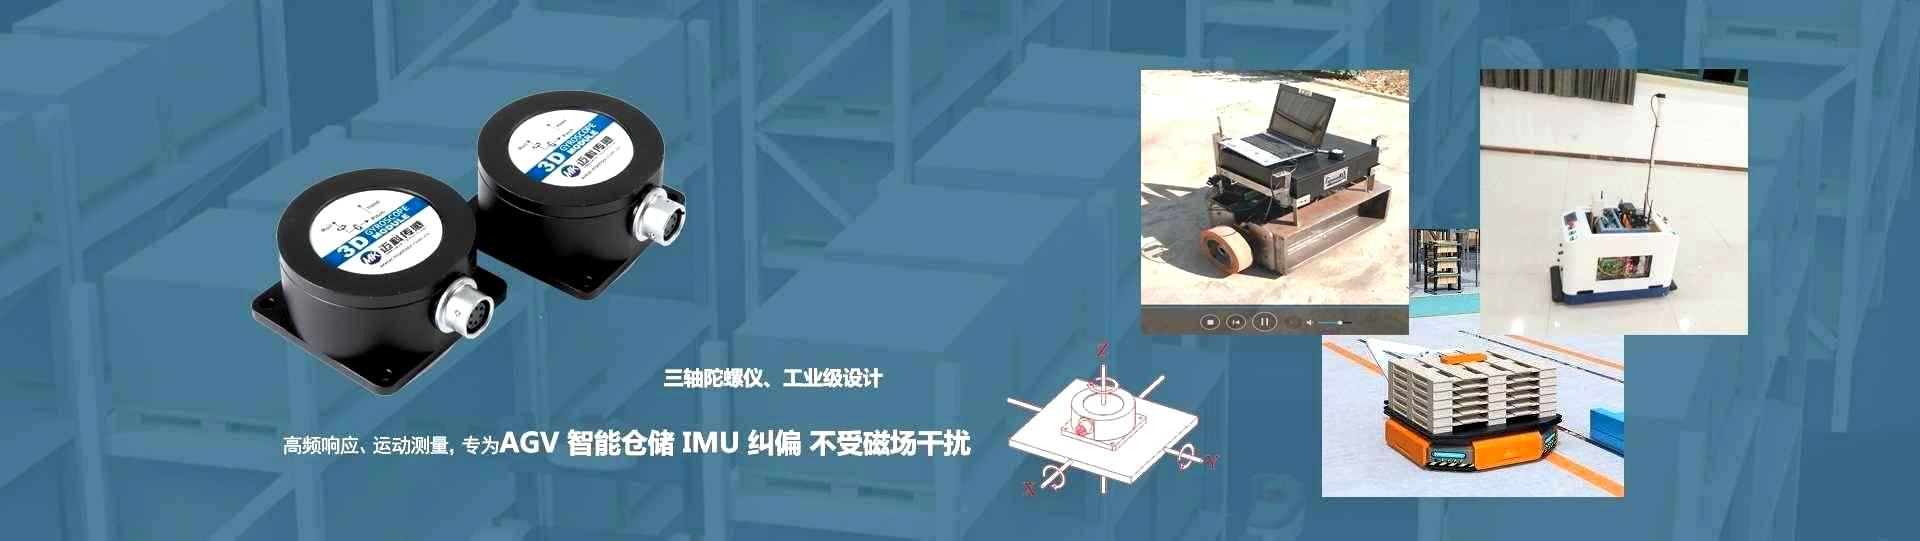 ML726陀螺仪导航定位-无锡J9九游会传感科技有限公司